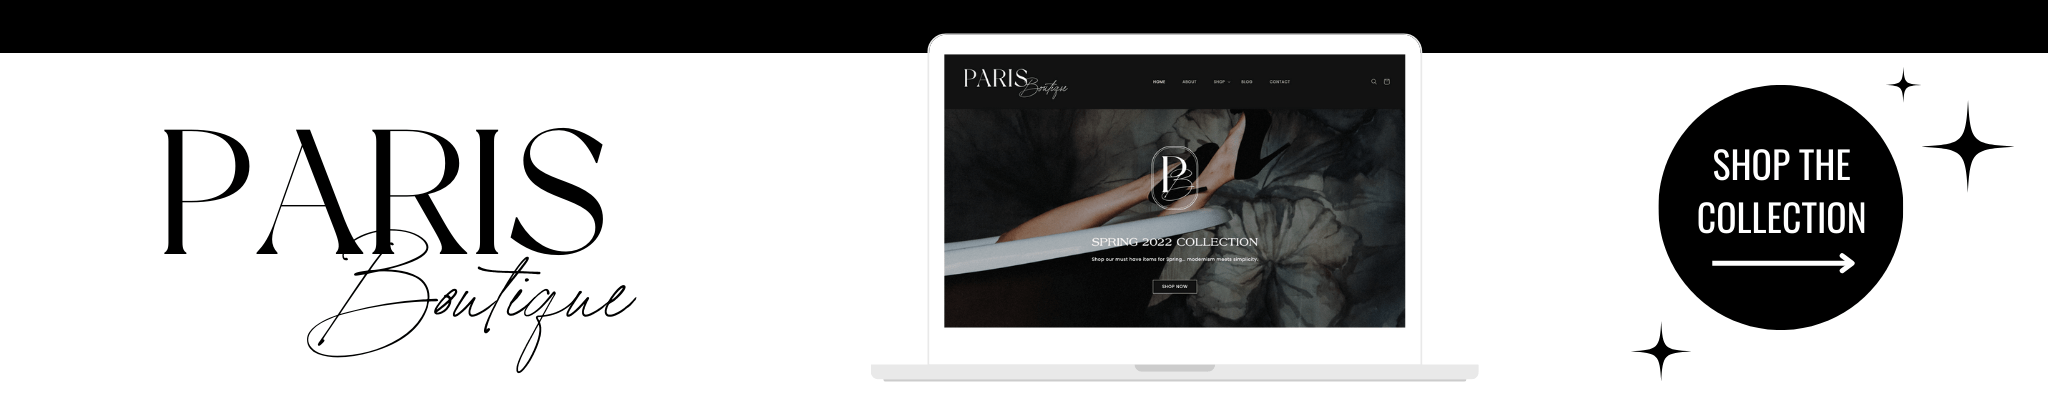 Feminie Color Palette for Paris Collection logo and website design